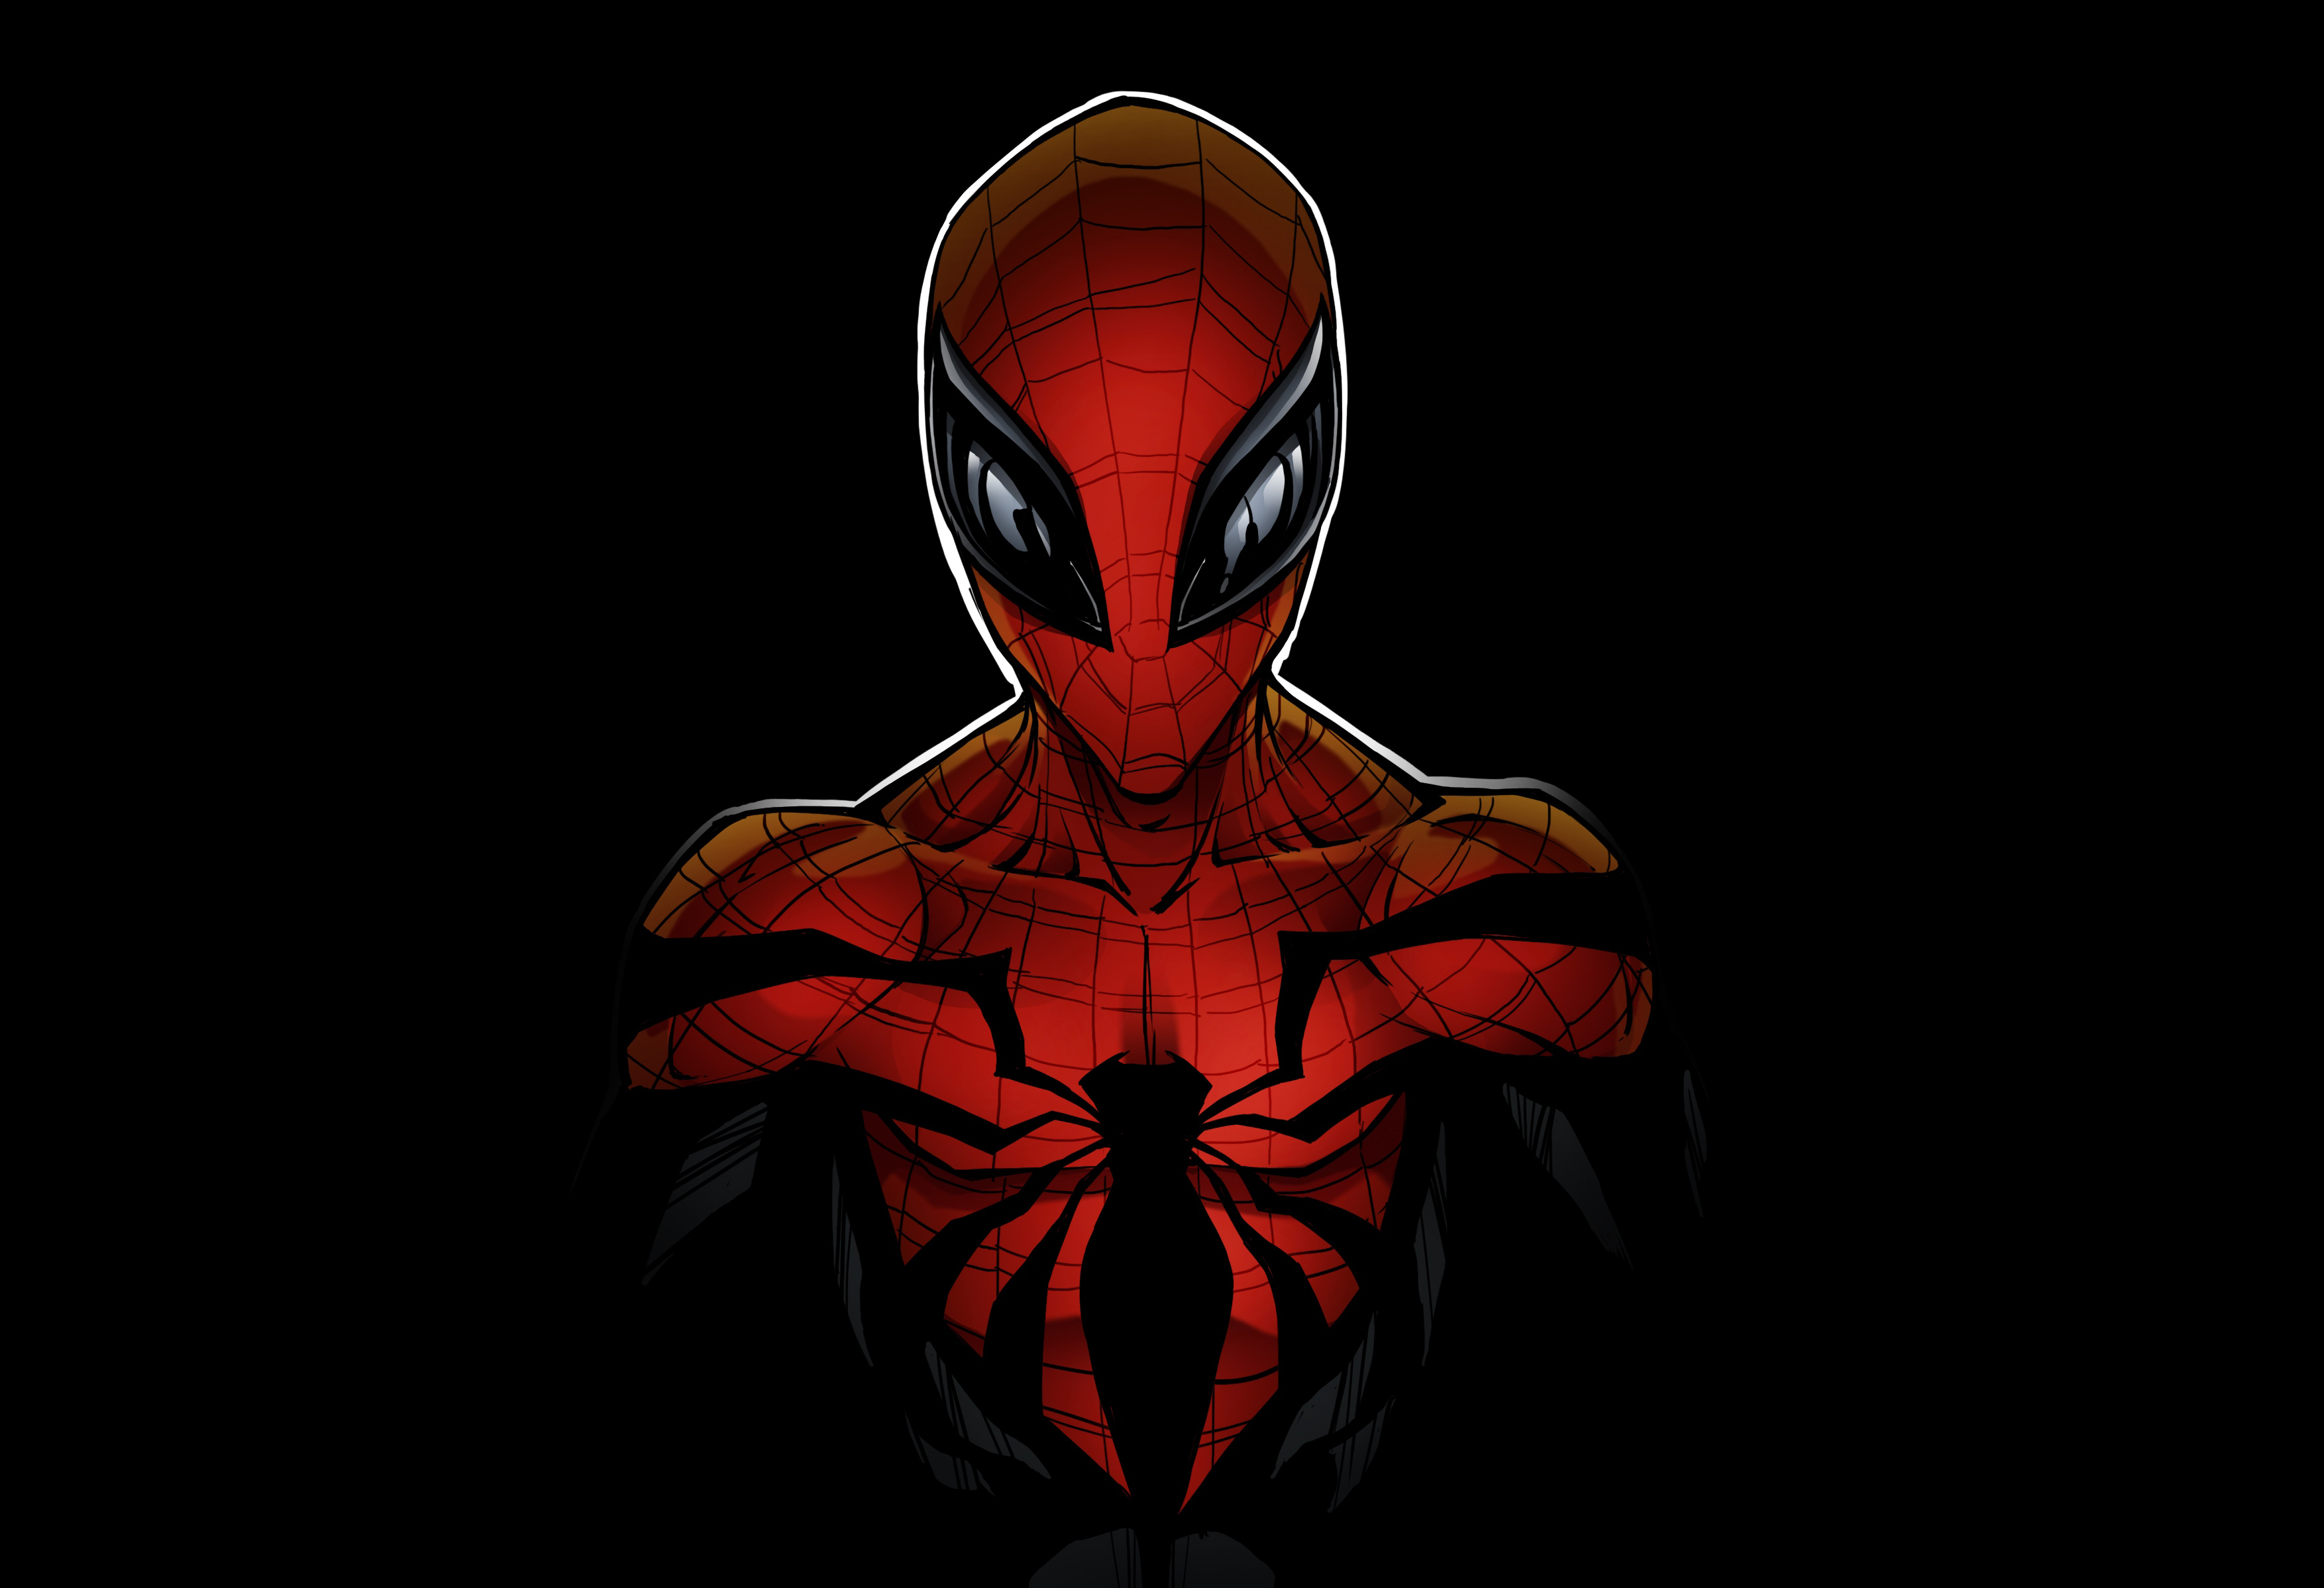 Spider-Man HD Wallpaper by Patrick Hennings